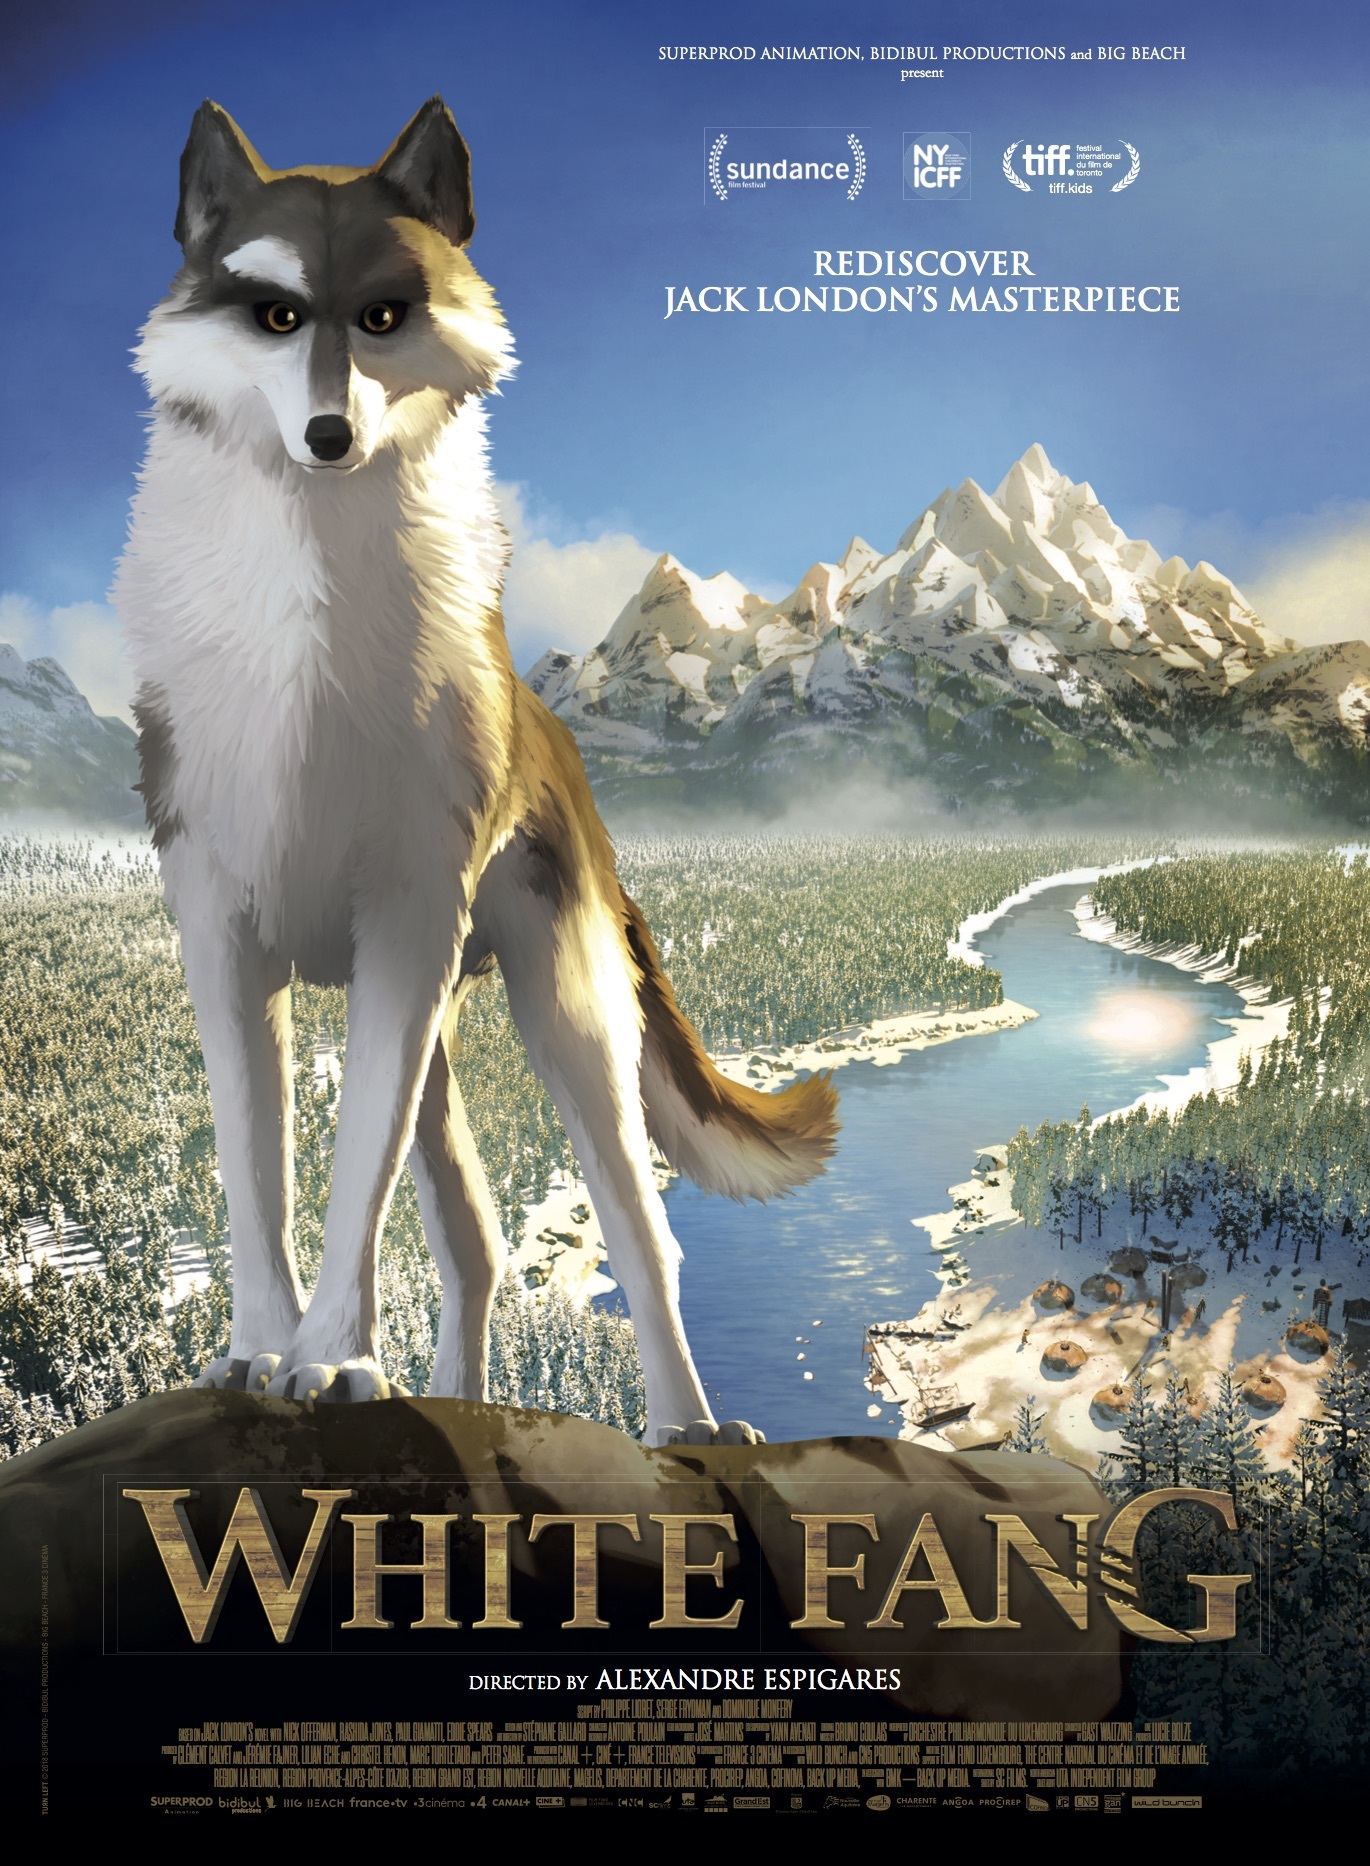 Nonton film White Fang layarkaca21 indoxx1 ganool online streaming terbaru